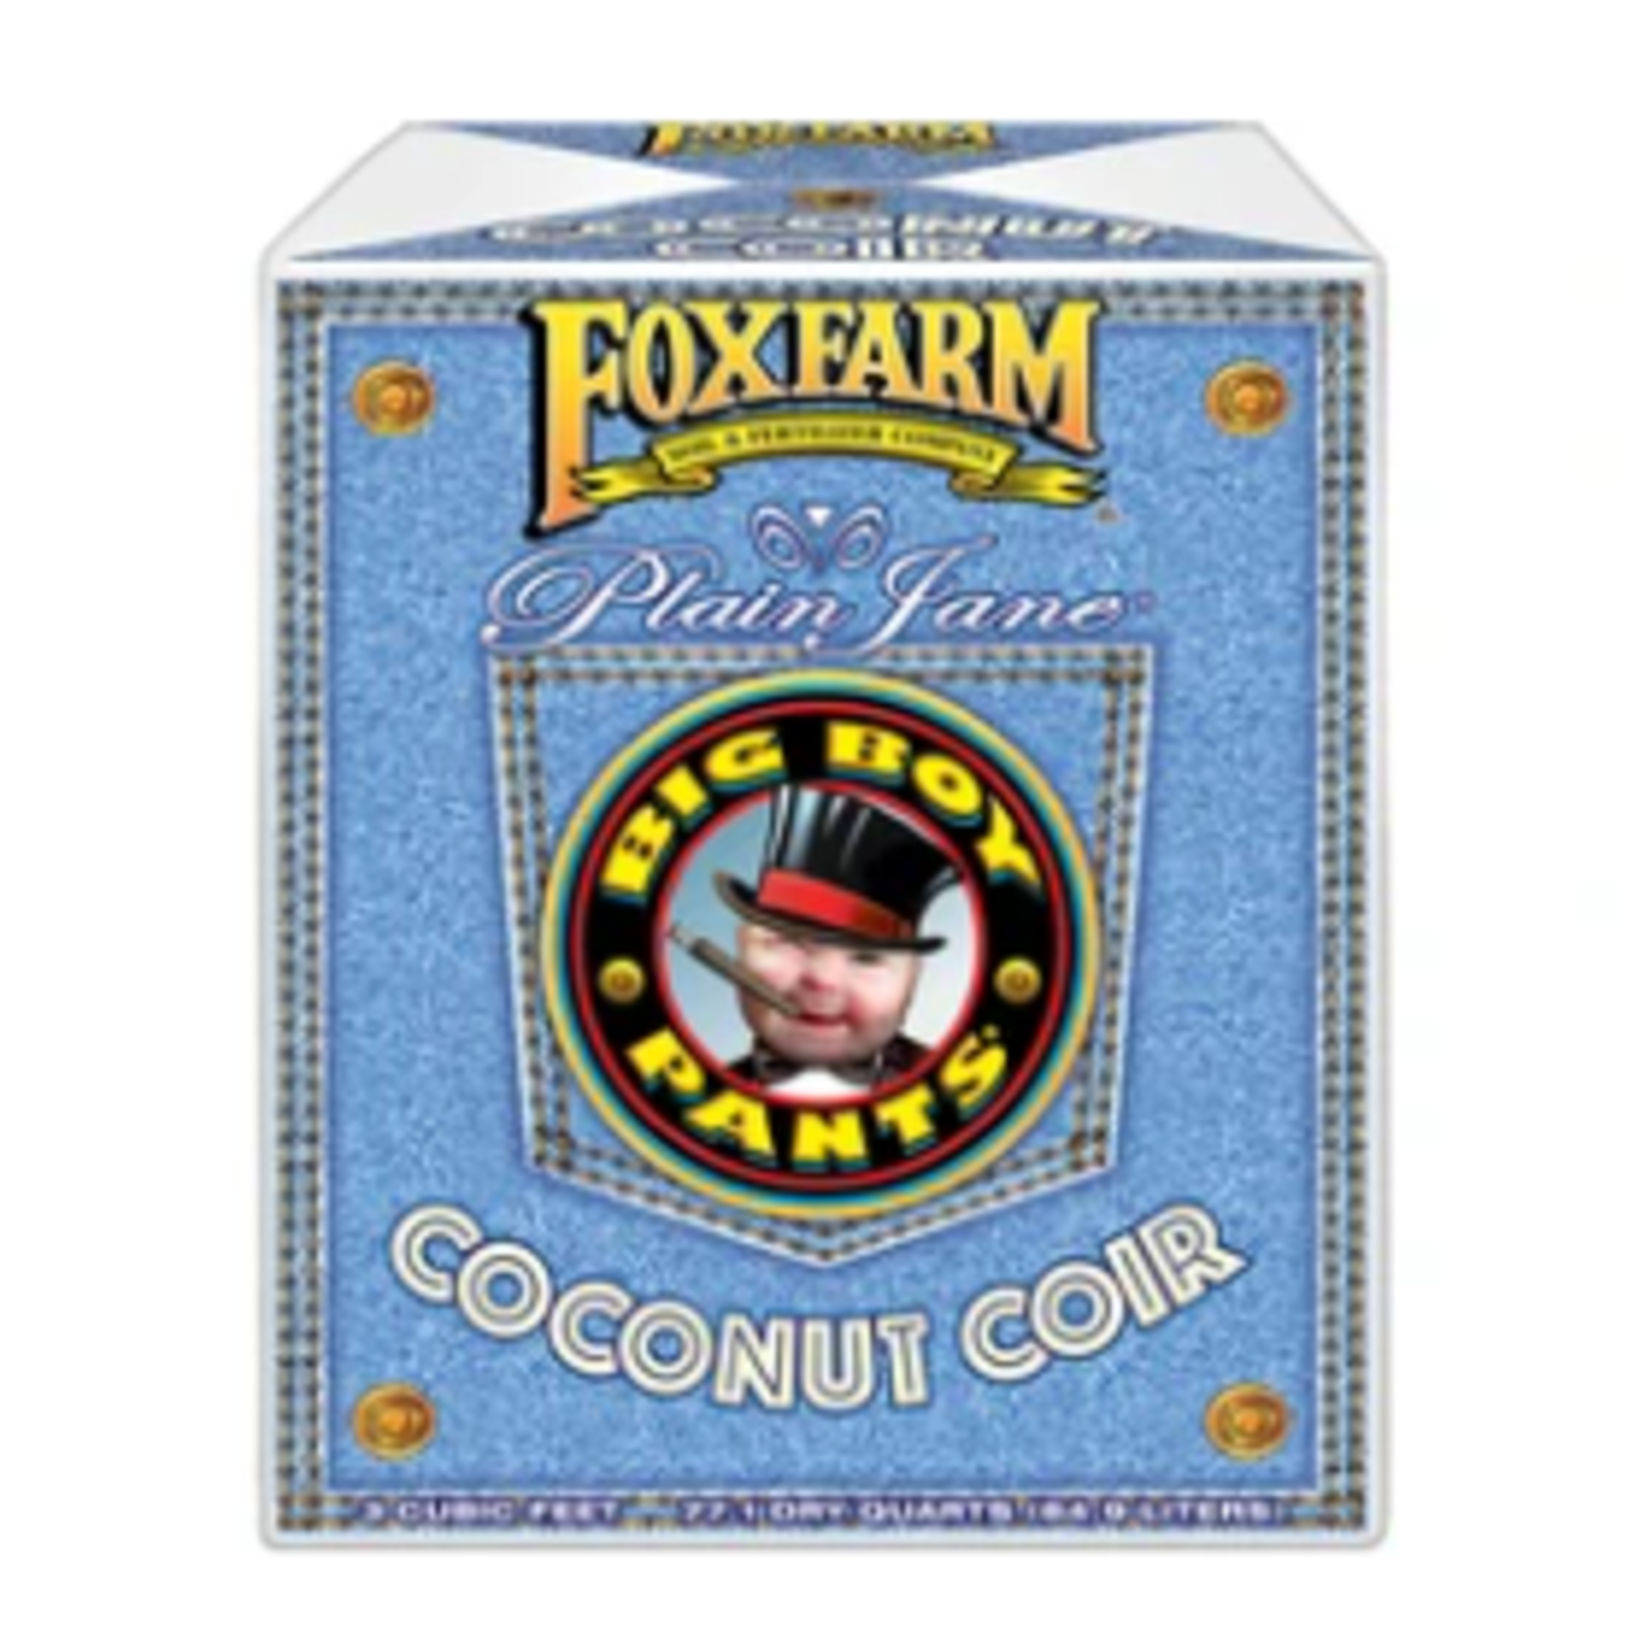 FoxFarm FoxFarm Plain Jane Big Boy Pants Coconut Coir 3.0 cu ft